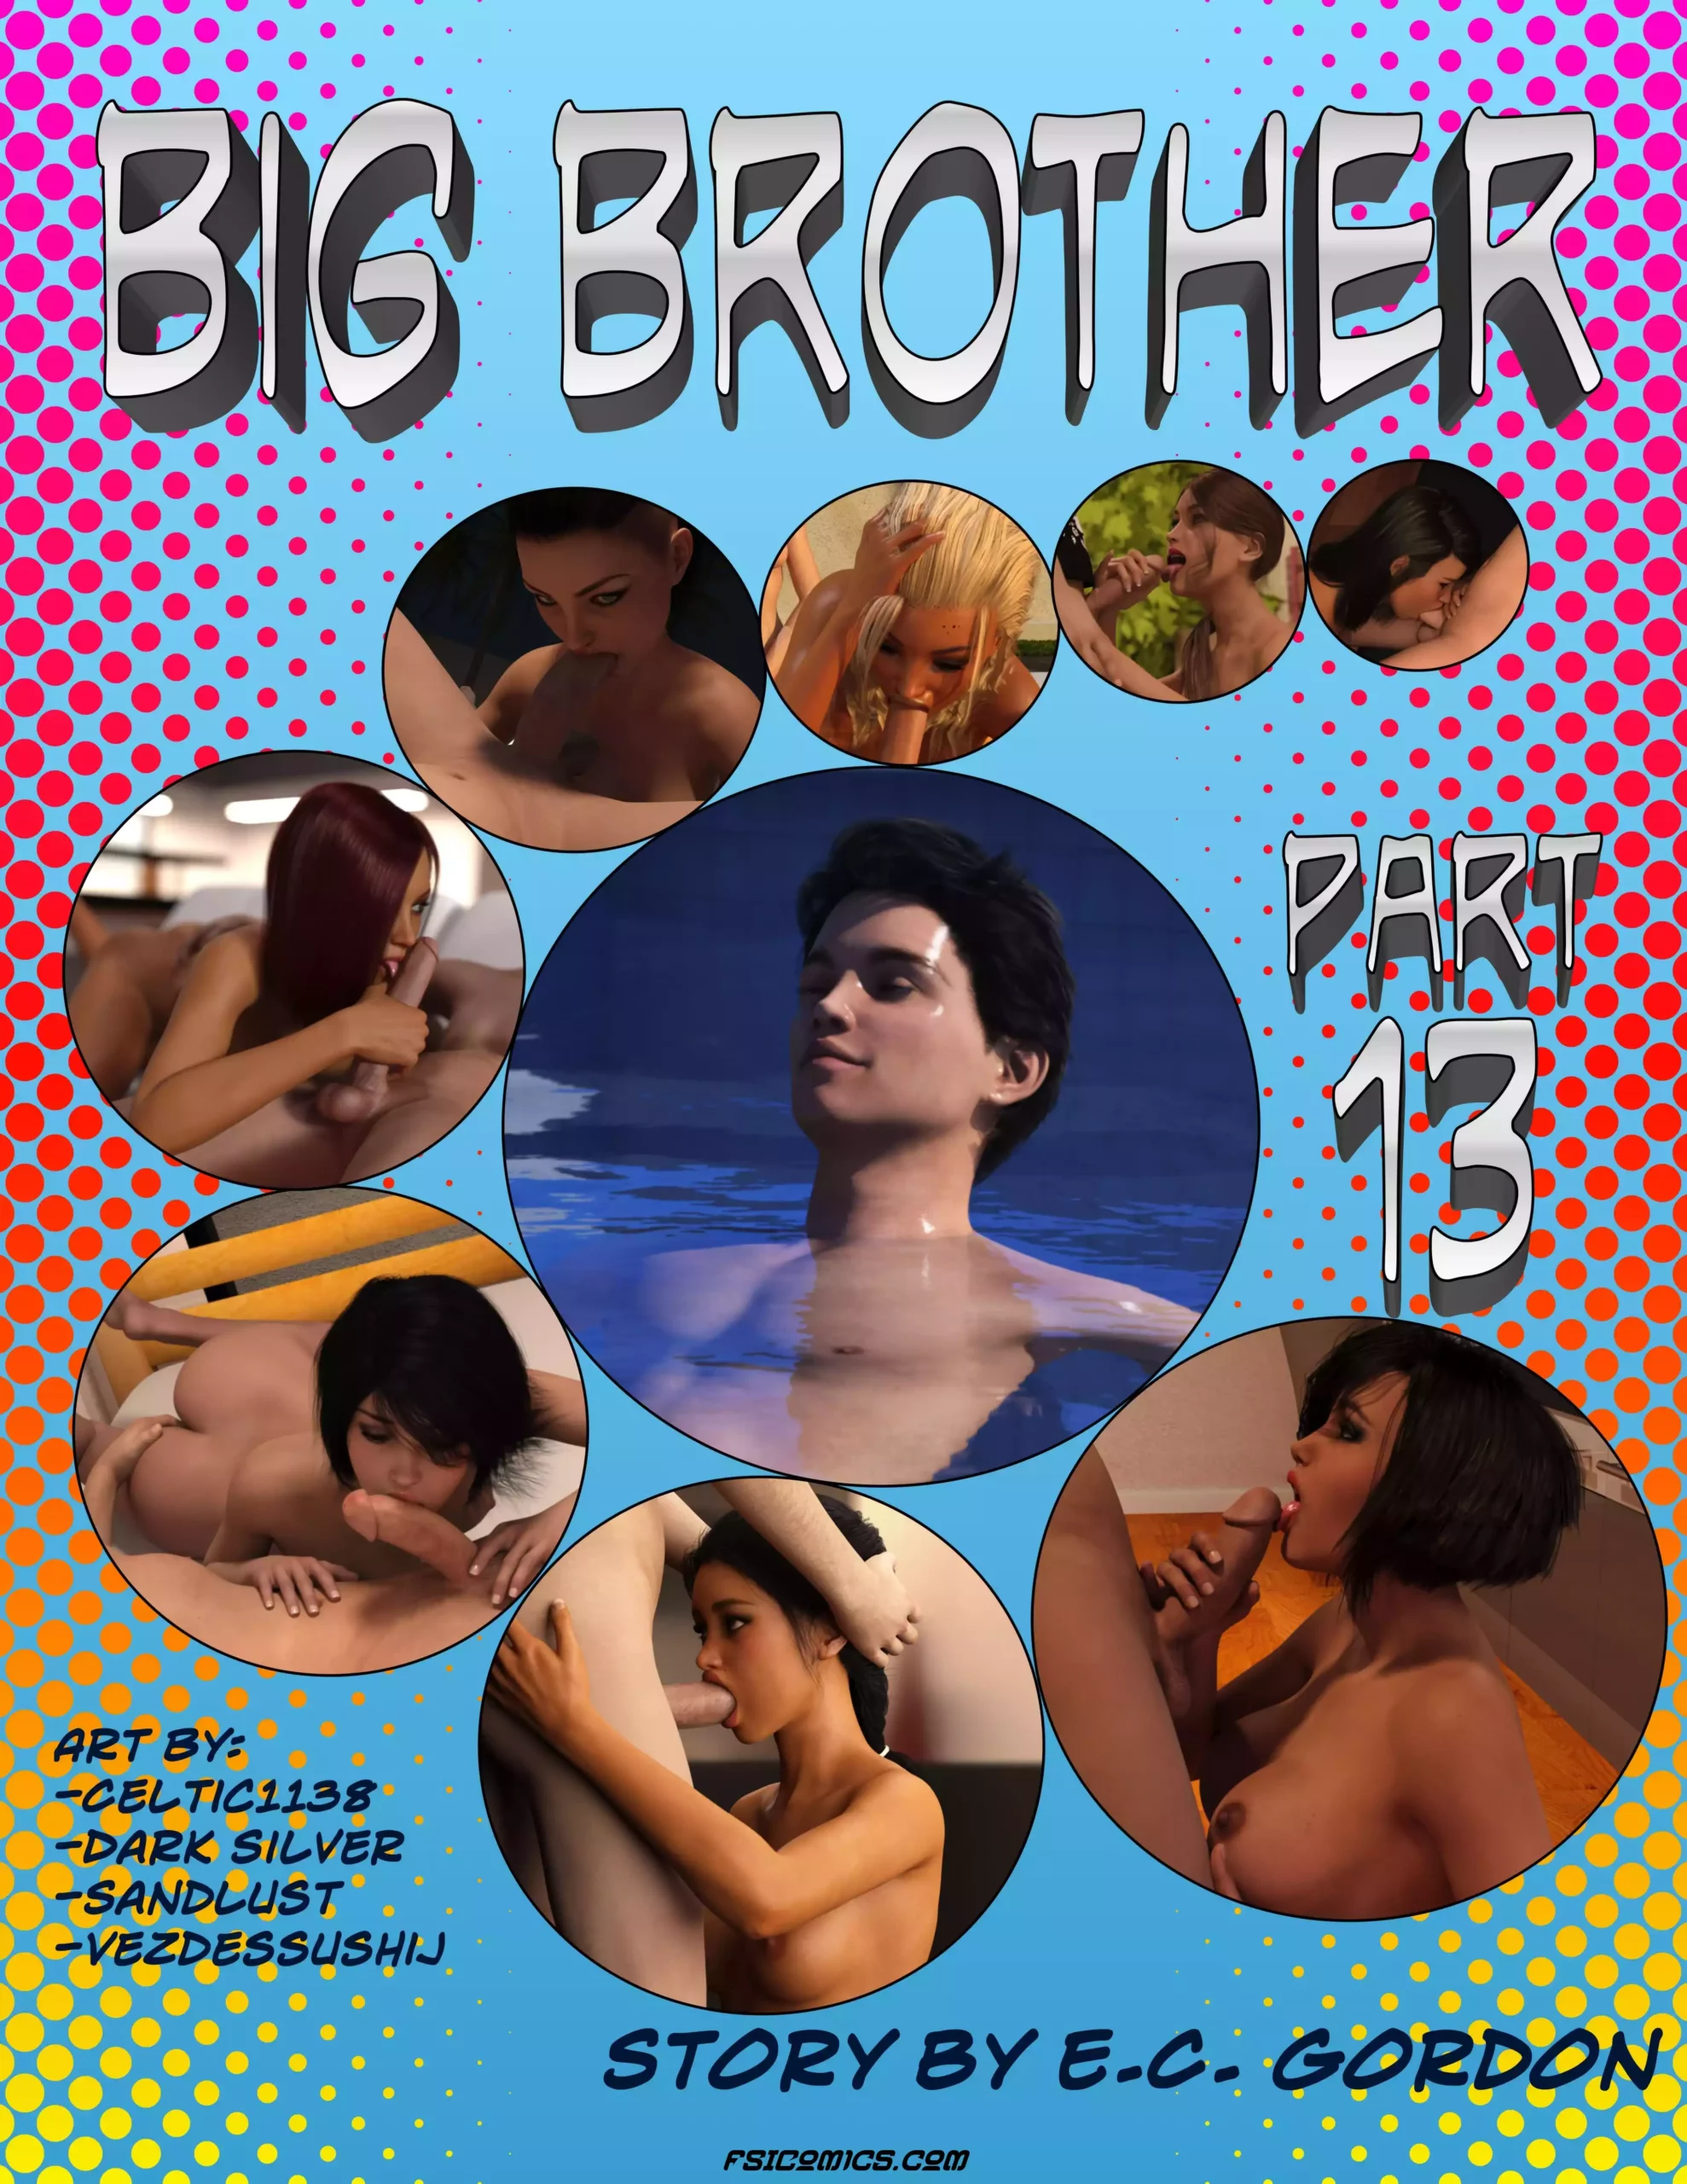 Big Brother Chapter 13 - Sandlust - 3 - FSIComics